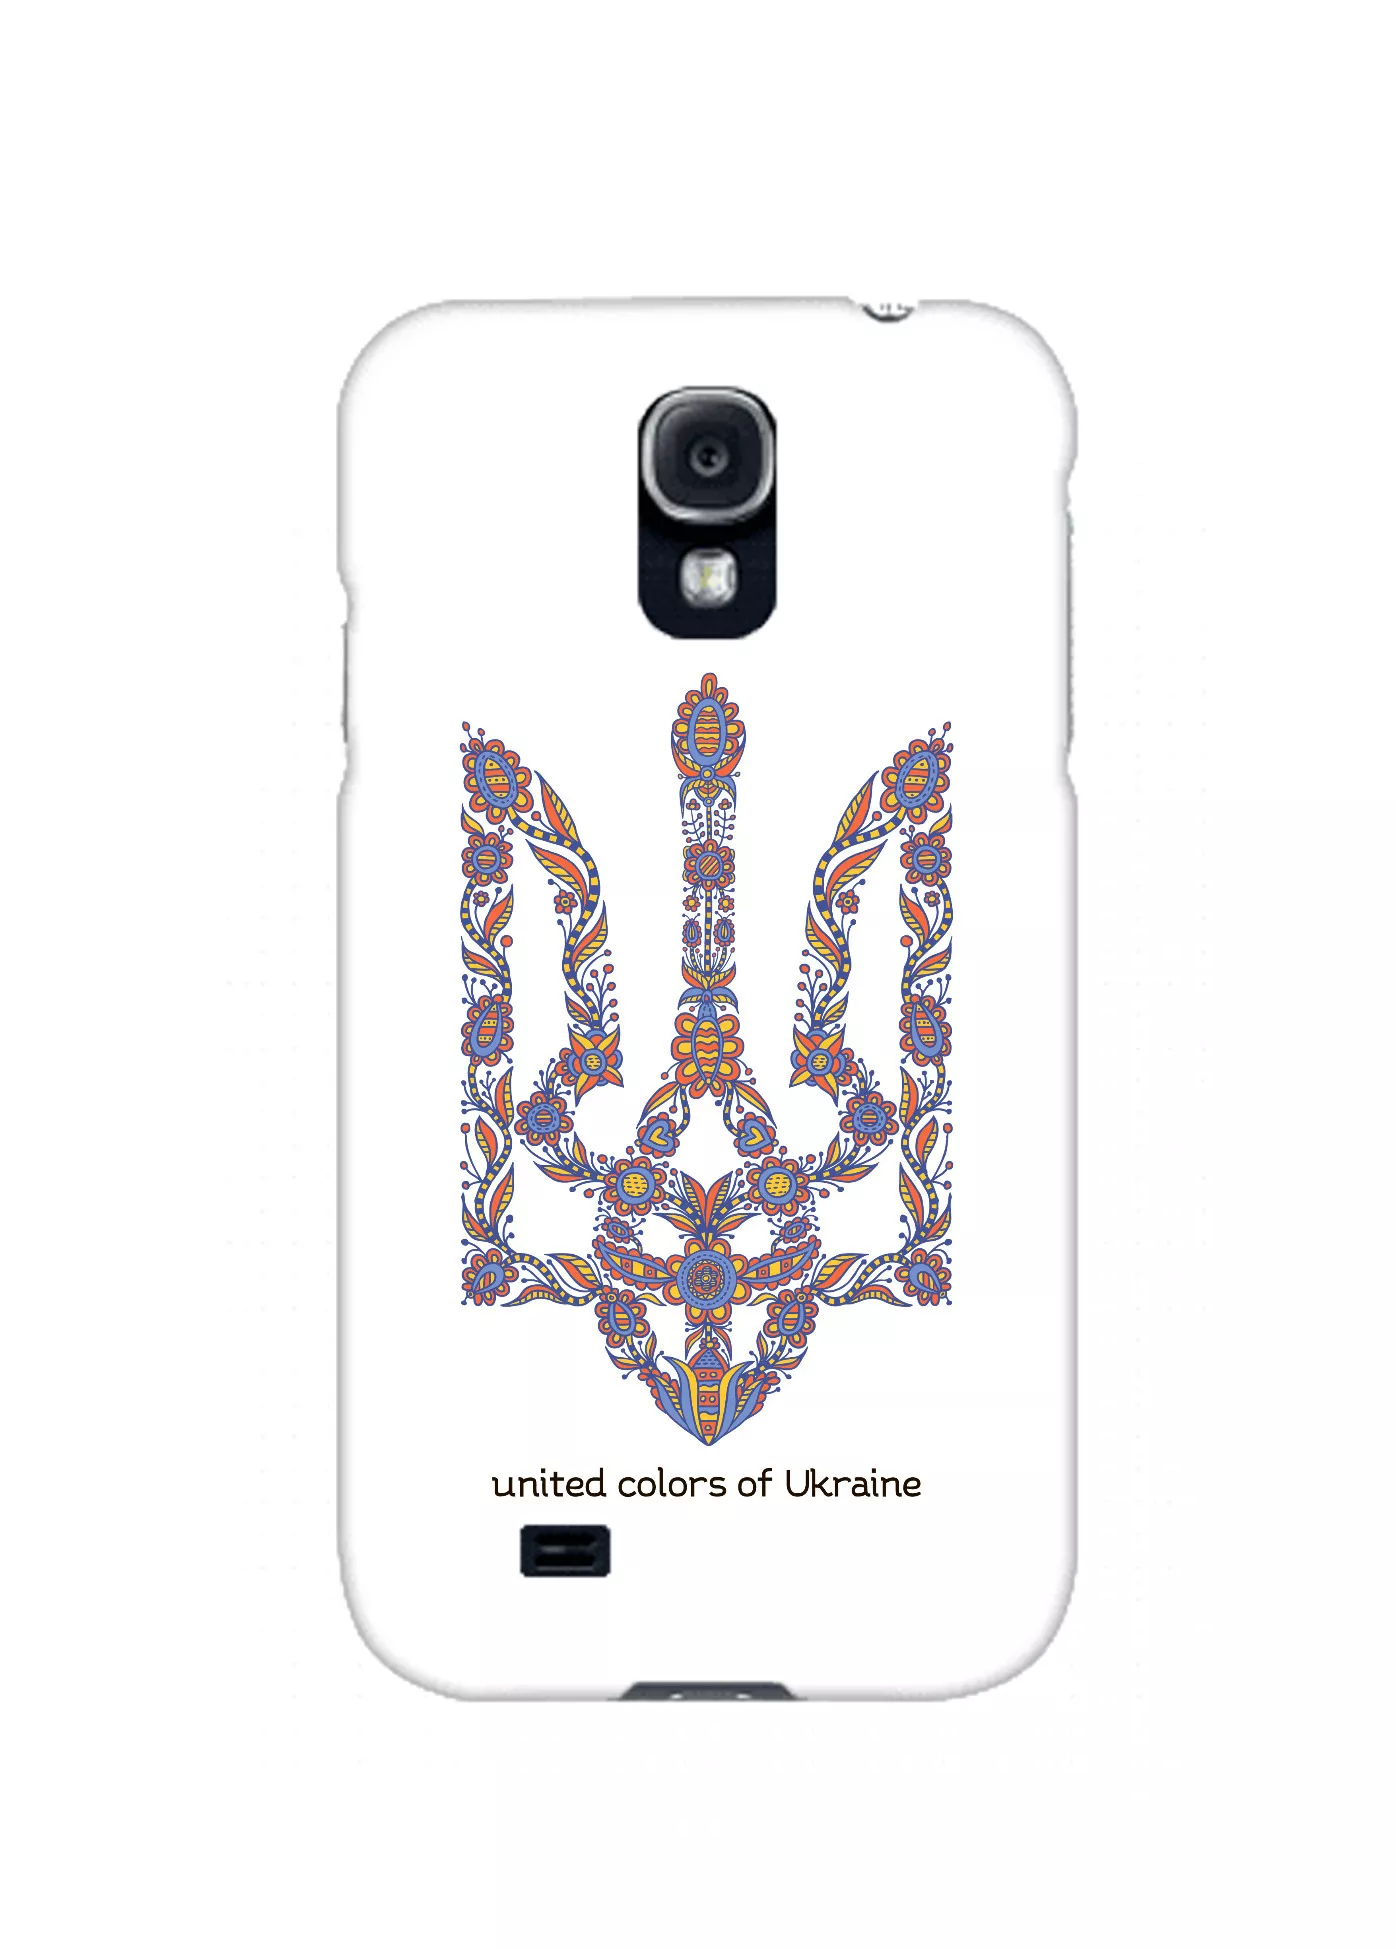 Чехол на Galaxy S4 mini - Герб Украины